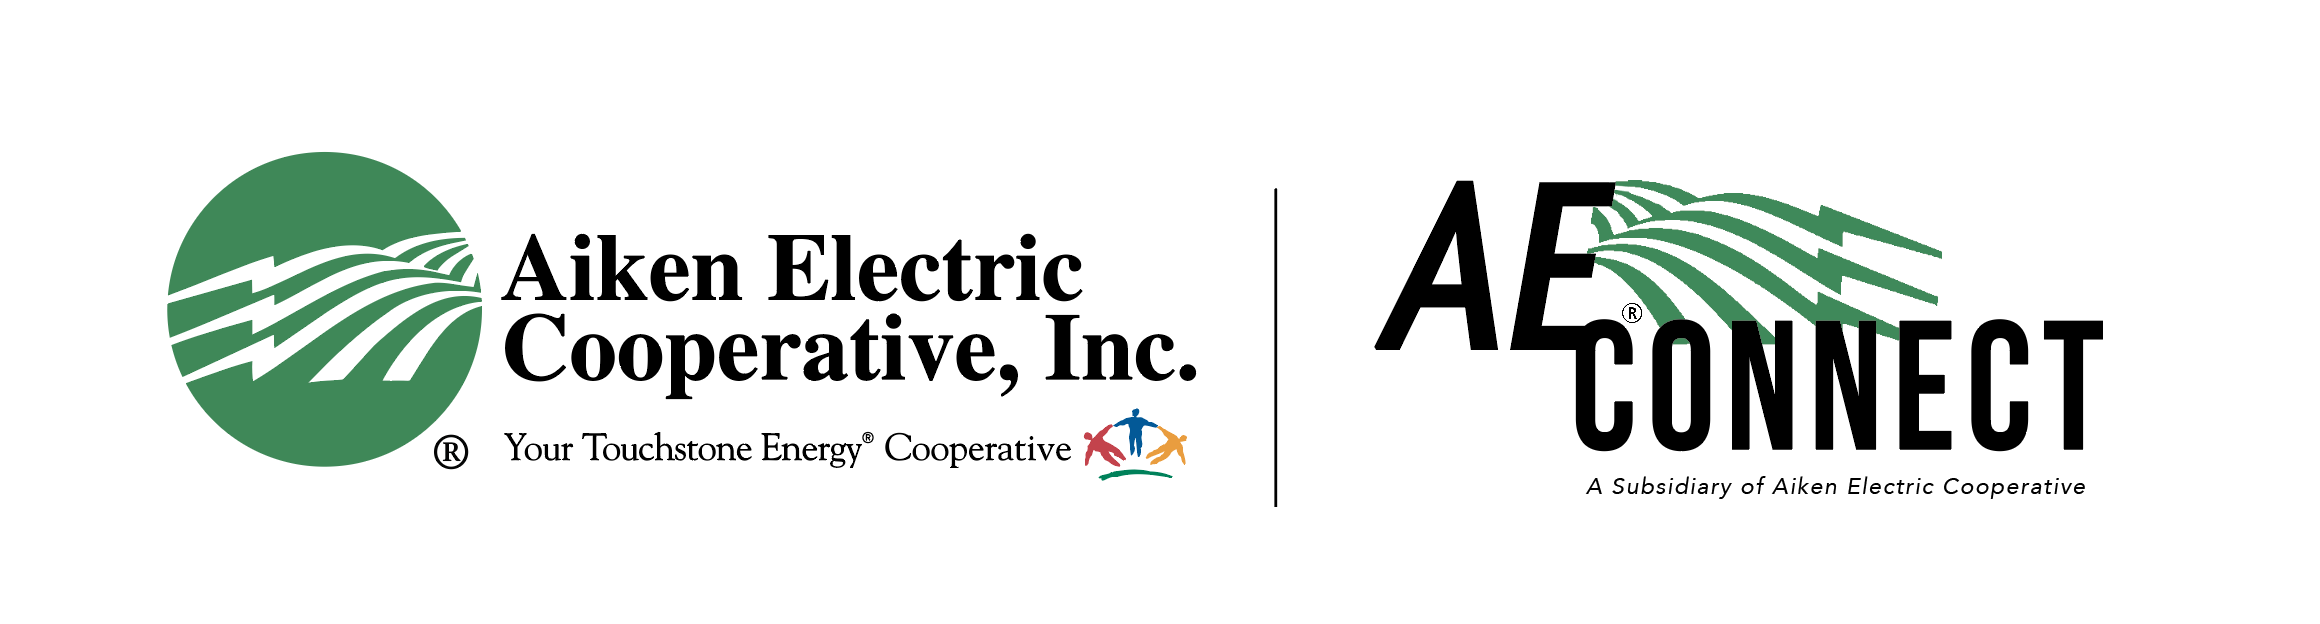 Aiken Electric Cooperative, Inc.